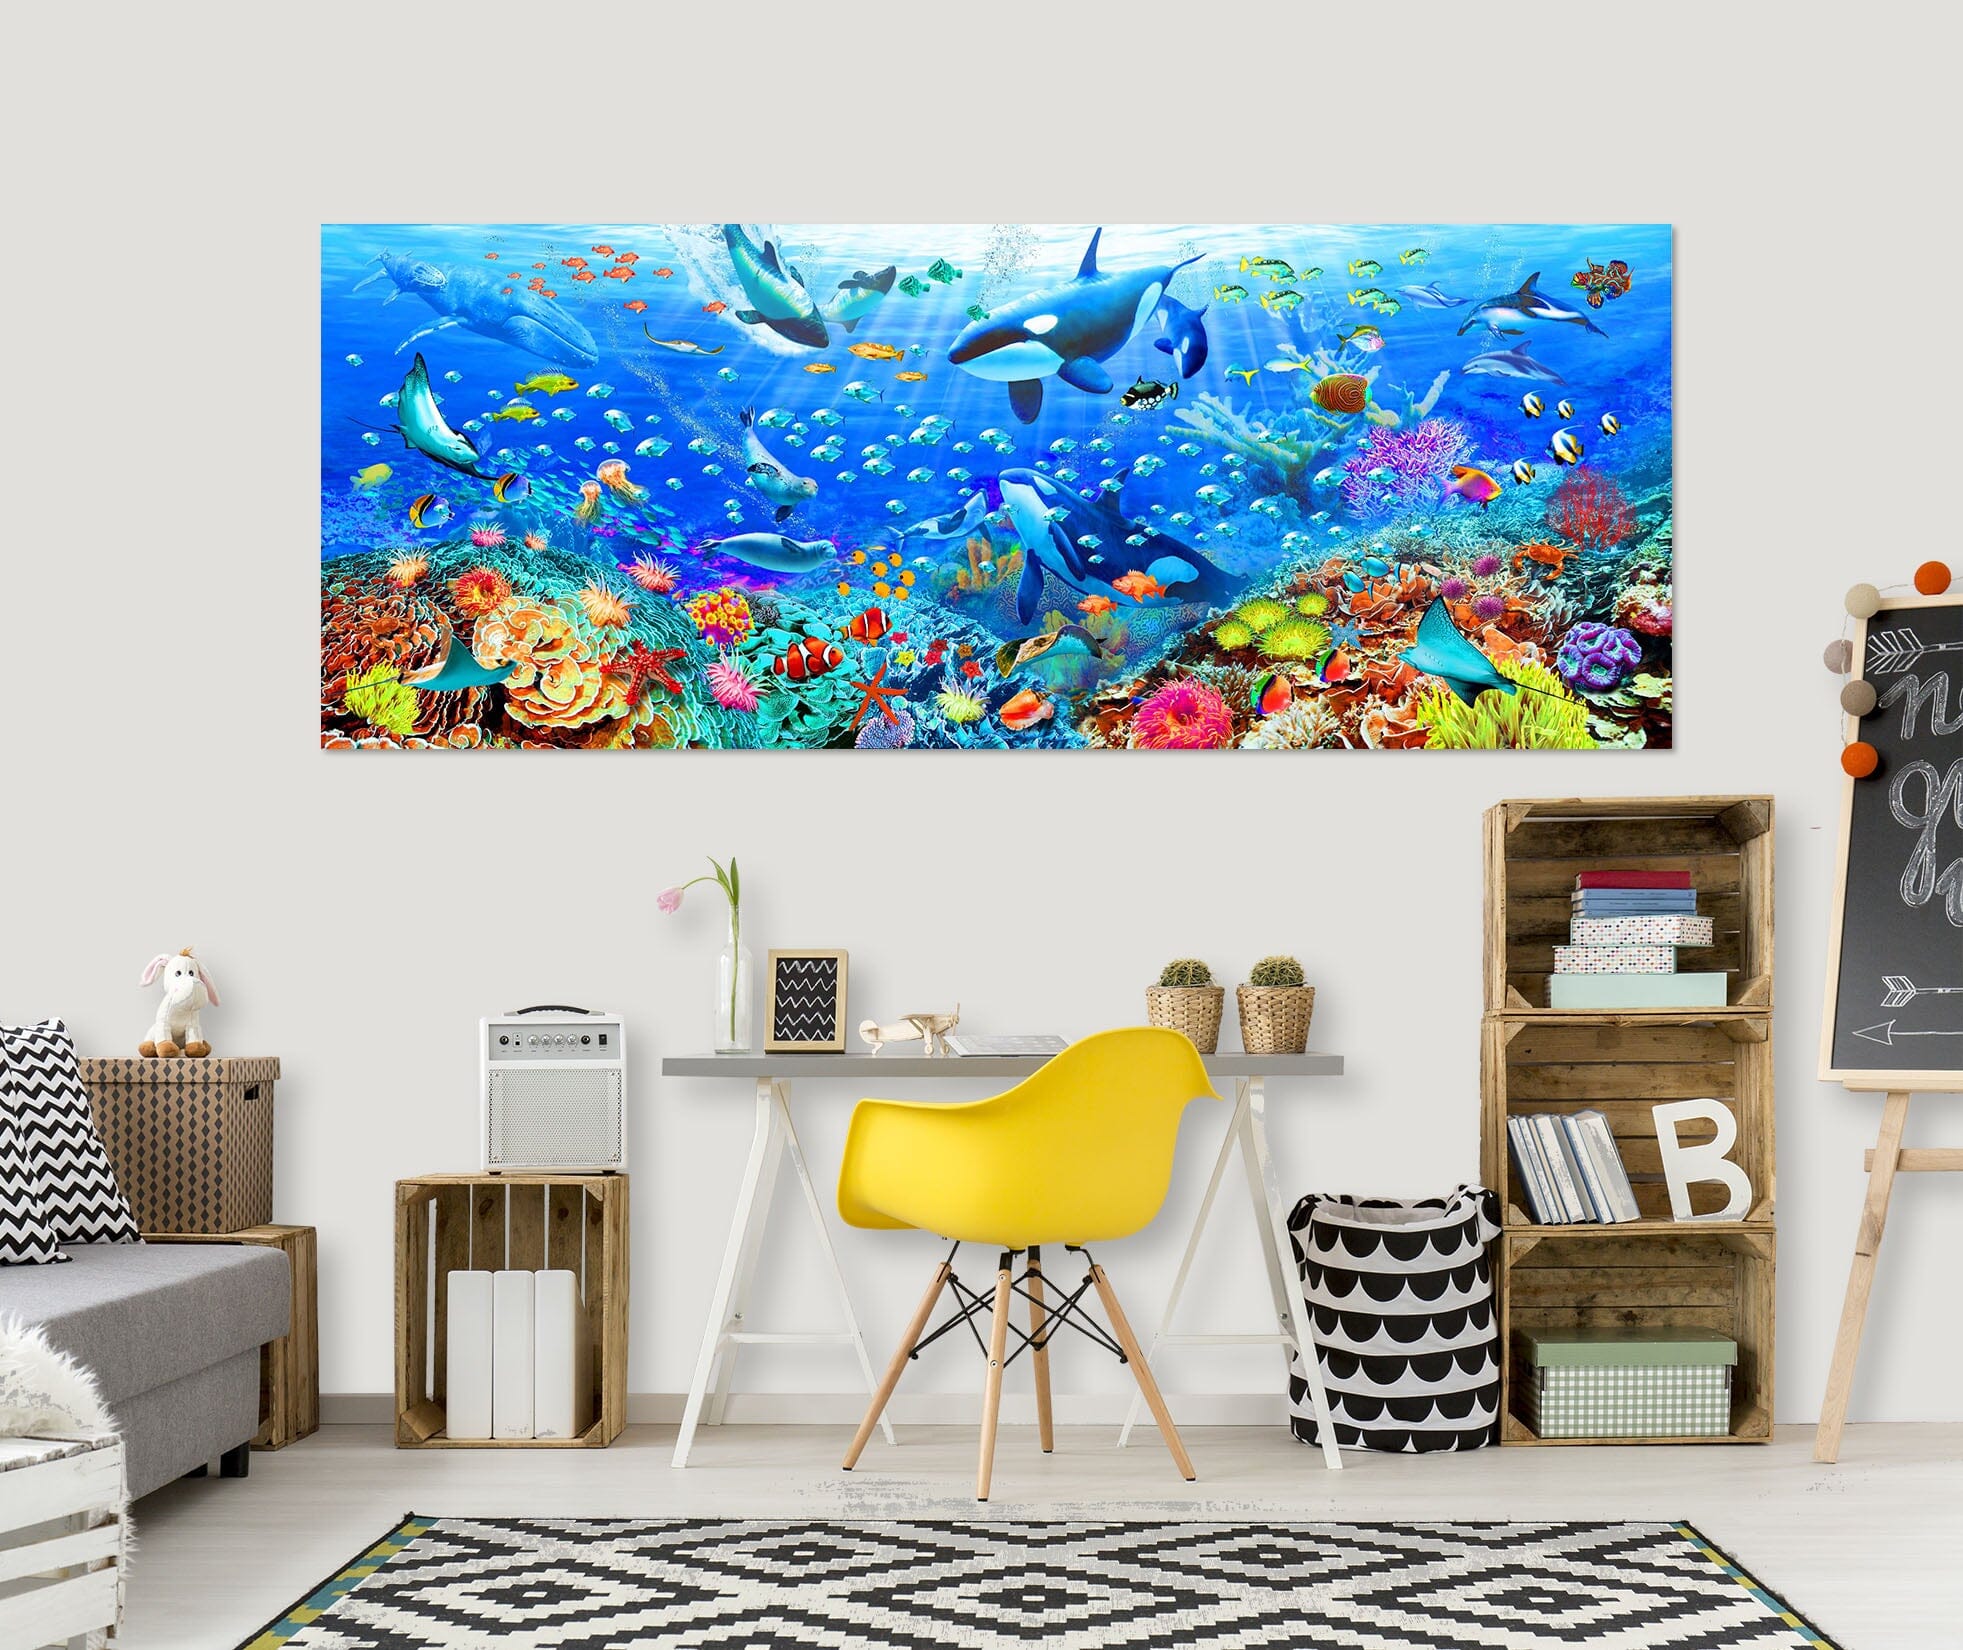 3D Underwater World 016 Adrian Chesterman Wall Sticker Wallpaper AJ Wallpaper 2 